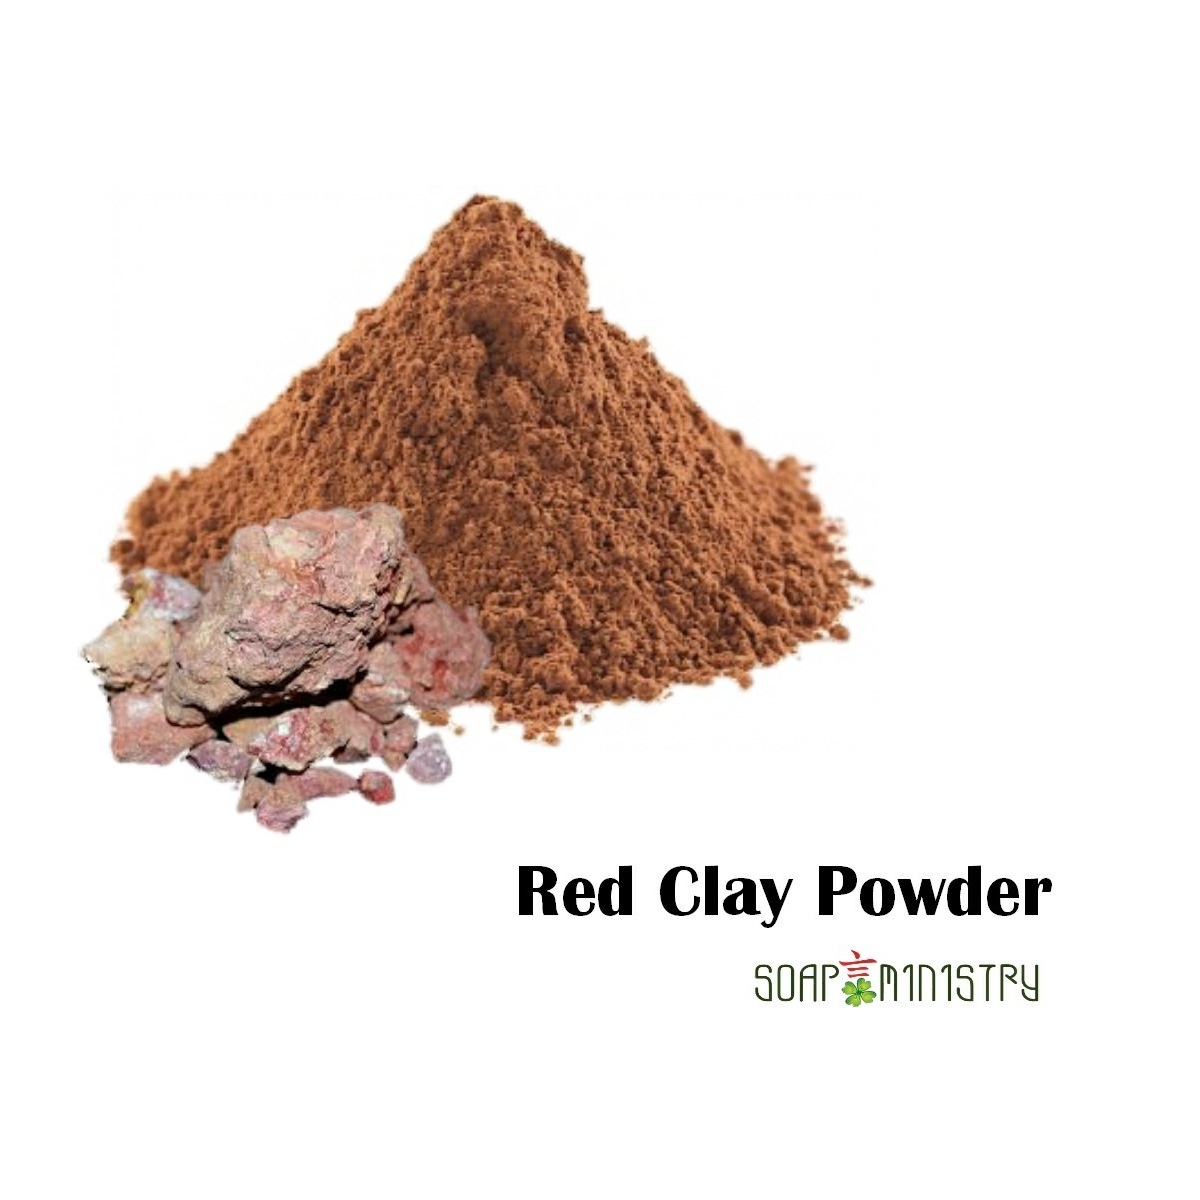 Red Clay Powder 250g